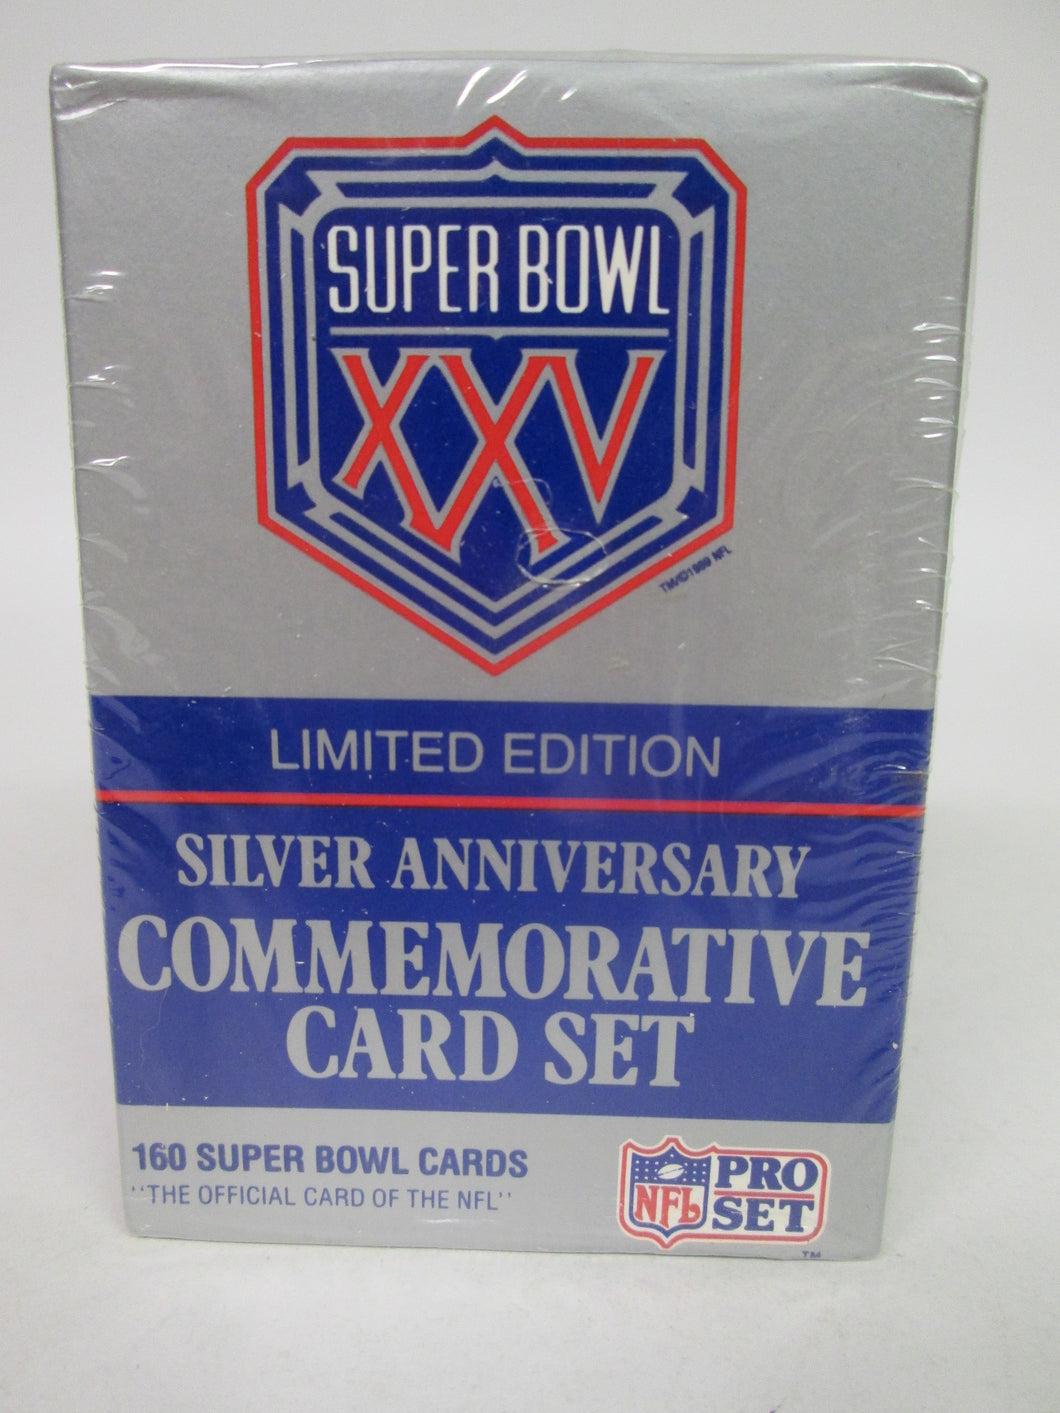 Super Bowl XXV Limited Edition Silver Anniversary Commemorative Card Set Sealed 160 Card Set